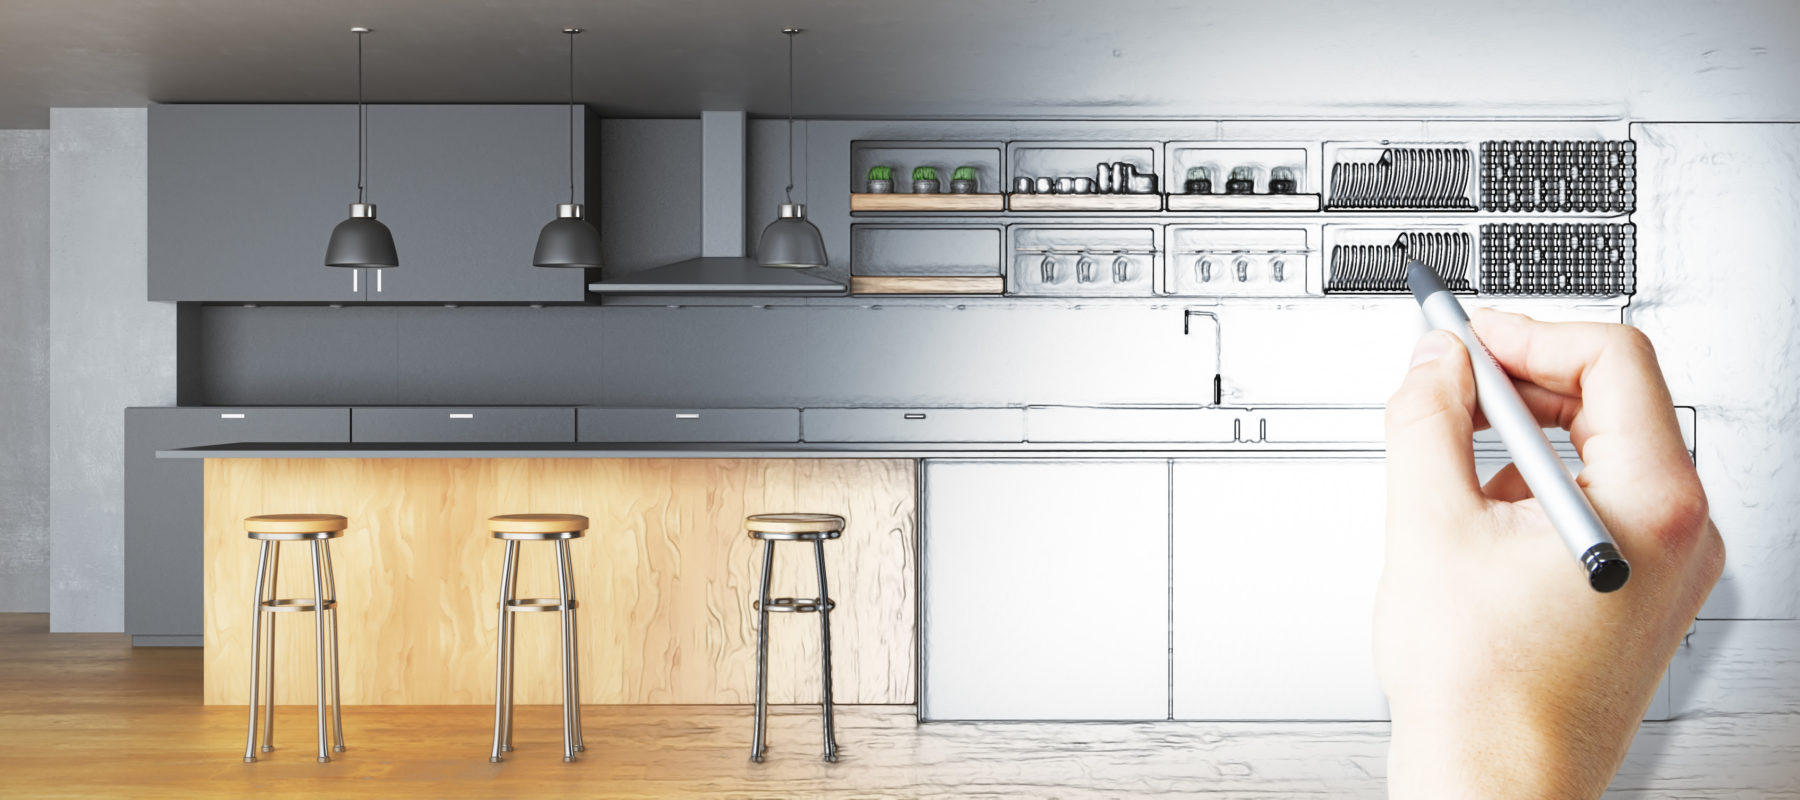 Kitchen Renovation or Kitchen Upgrade: Which Has the Best ROI? 3